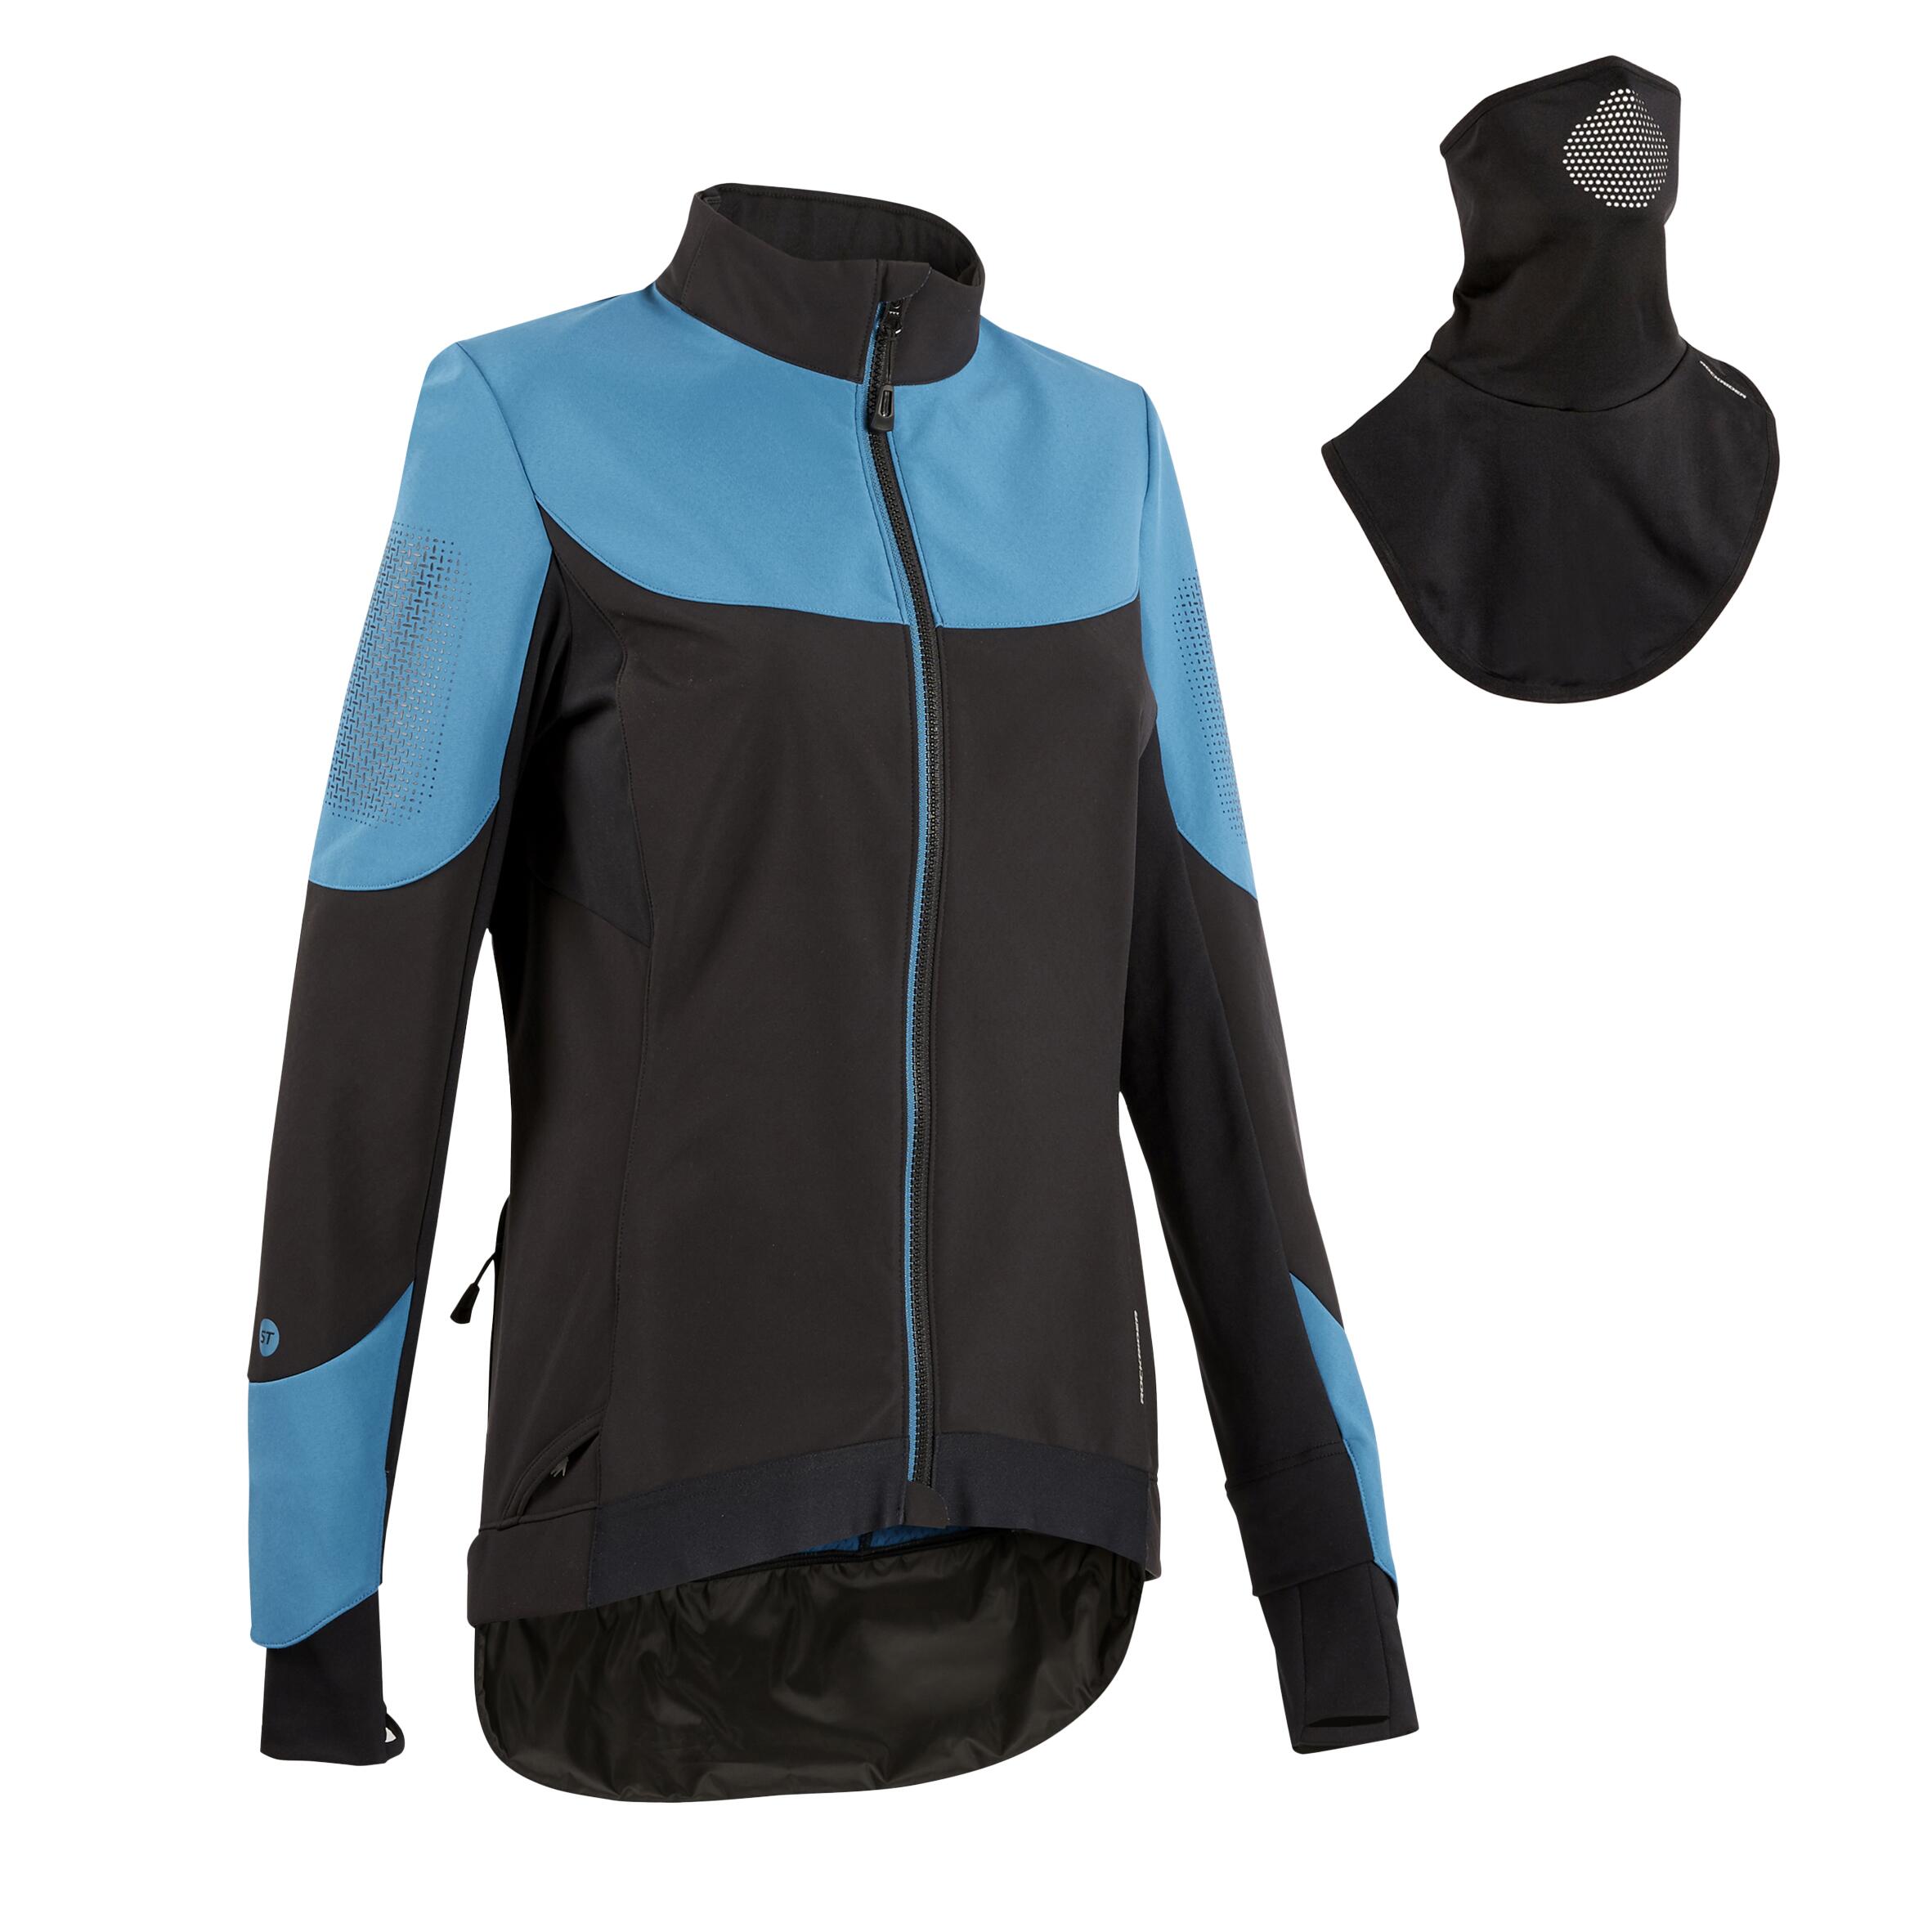 Women's Winter Mountain Bike Jacket - Turquoise/Black 1/19